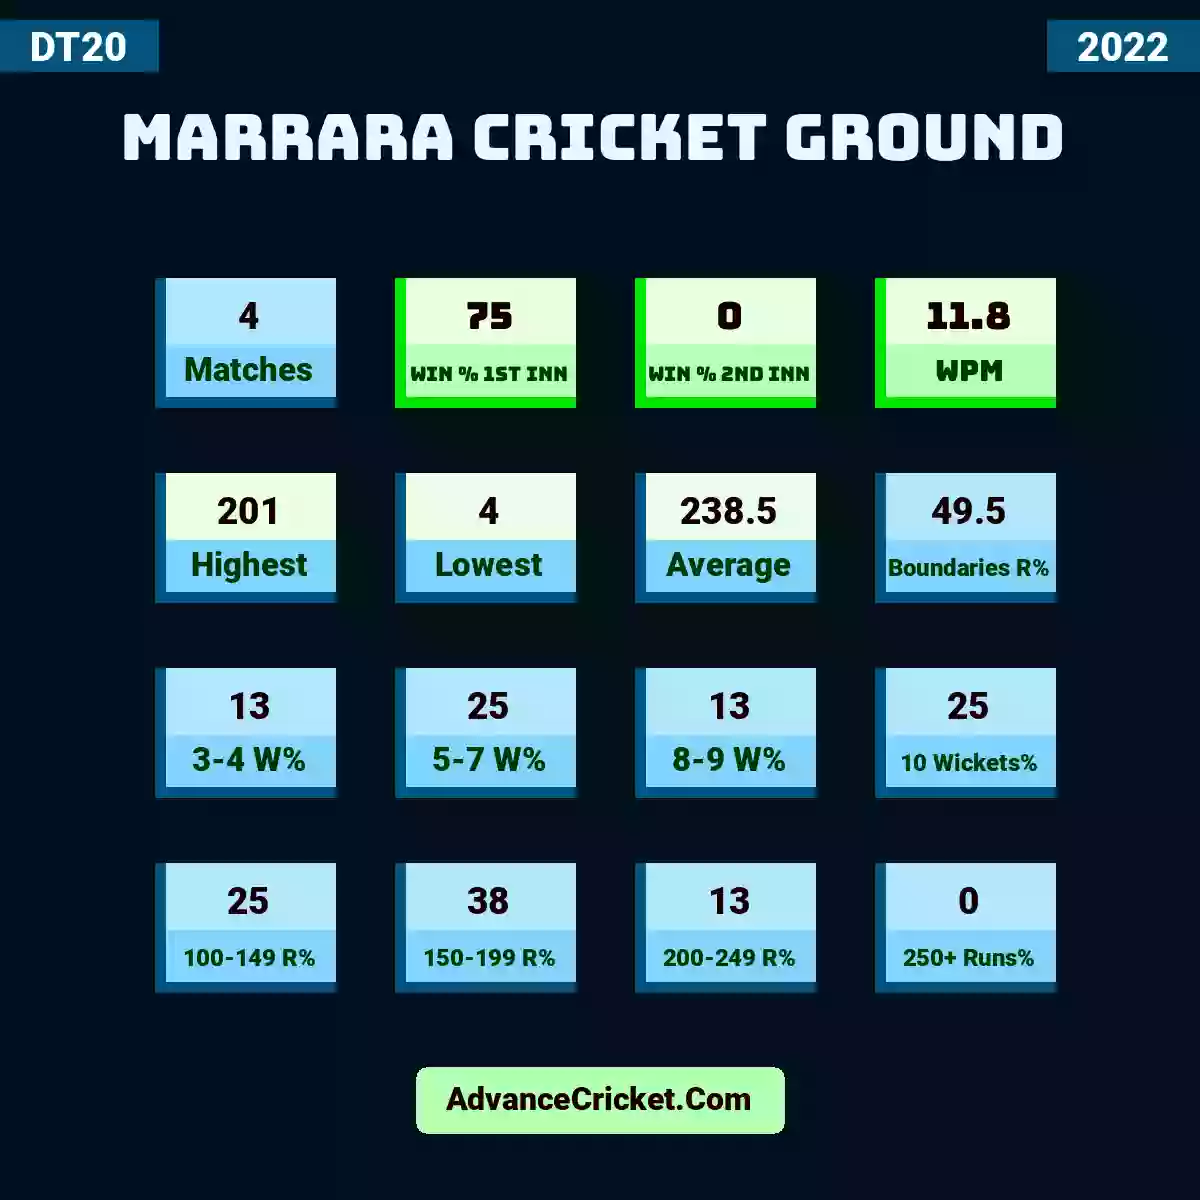 Image showing Marrara Cricket Ground  with Matches: 4, Win % 1st Inn: 75, Win % 2nd Inn: 0, WPM: 11.8, Highest: 201, Lowest: 4, Average: 238.5, Boundaries R%: 49.5, 3-4 W%: 13, 5-7 W%: 25, 8-9 W%: 13, 10 Wickets%: 25, 100-149 R%: 25, 150-199 R%: 38, 200-249 R%: 13, 250+ Runs%: 0.